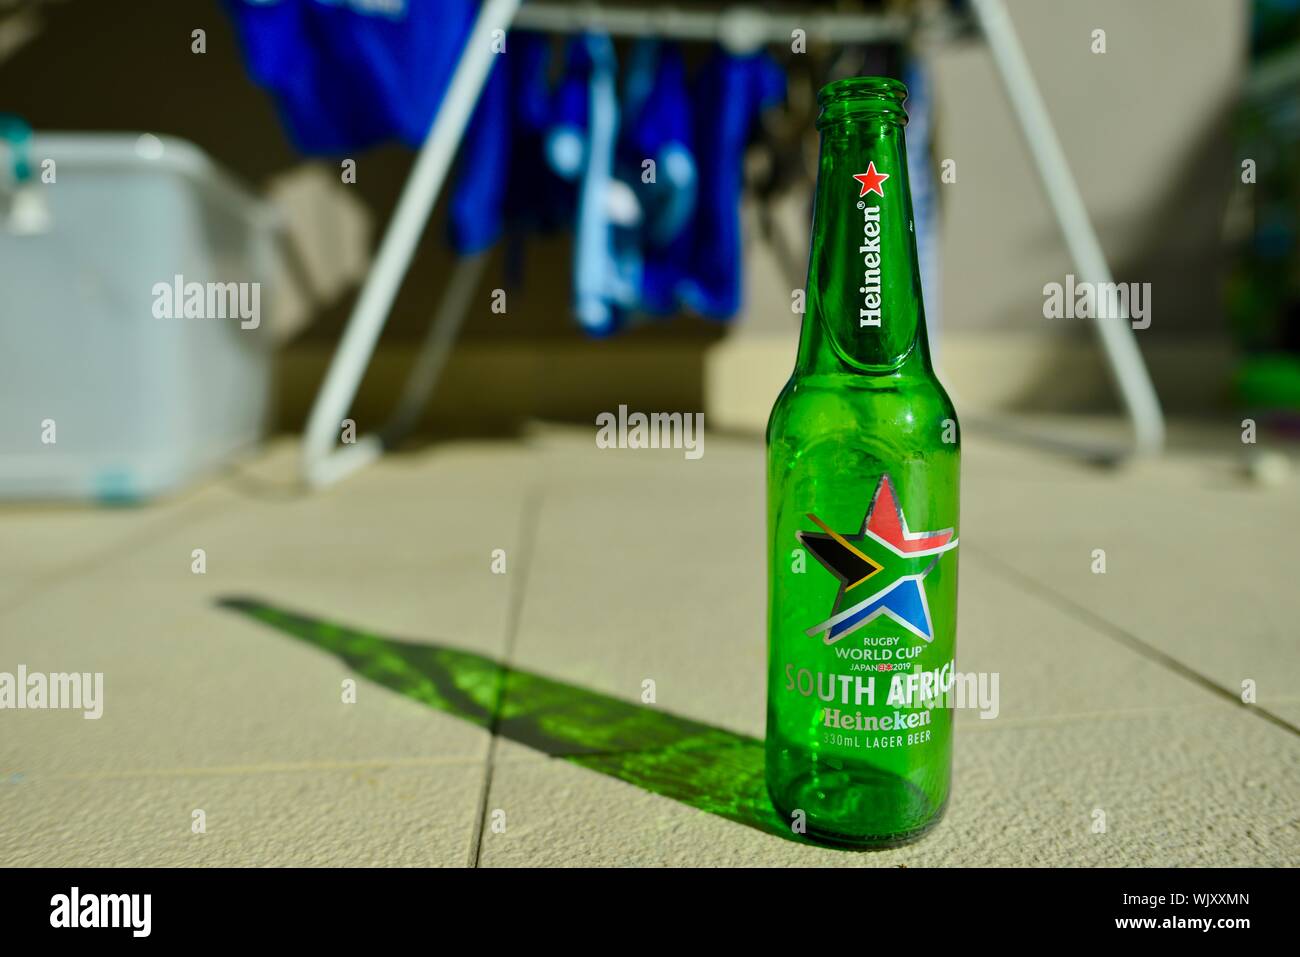 Heineken Heineken Rugby World Cup 2019 Beer Bottles 